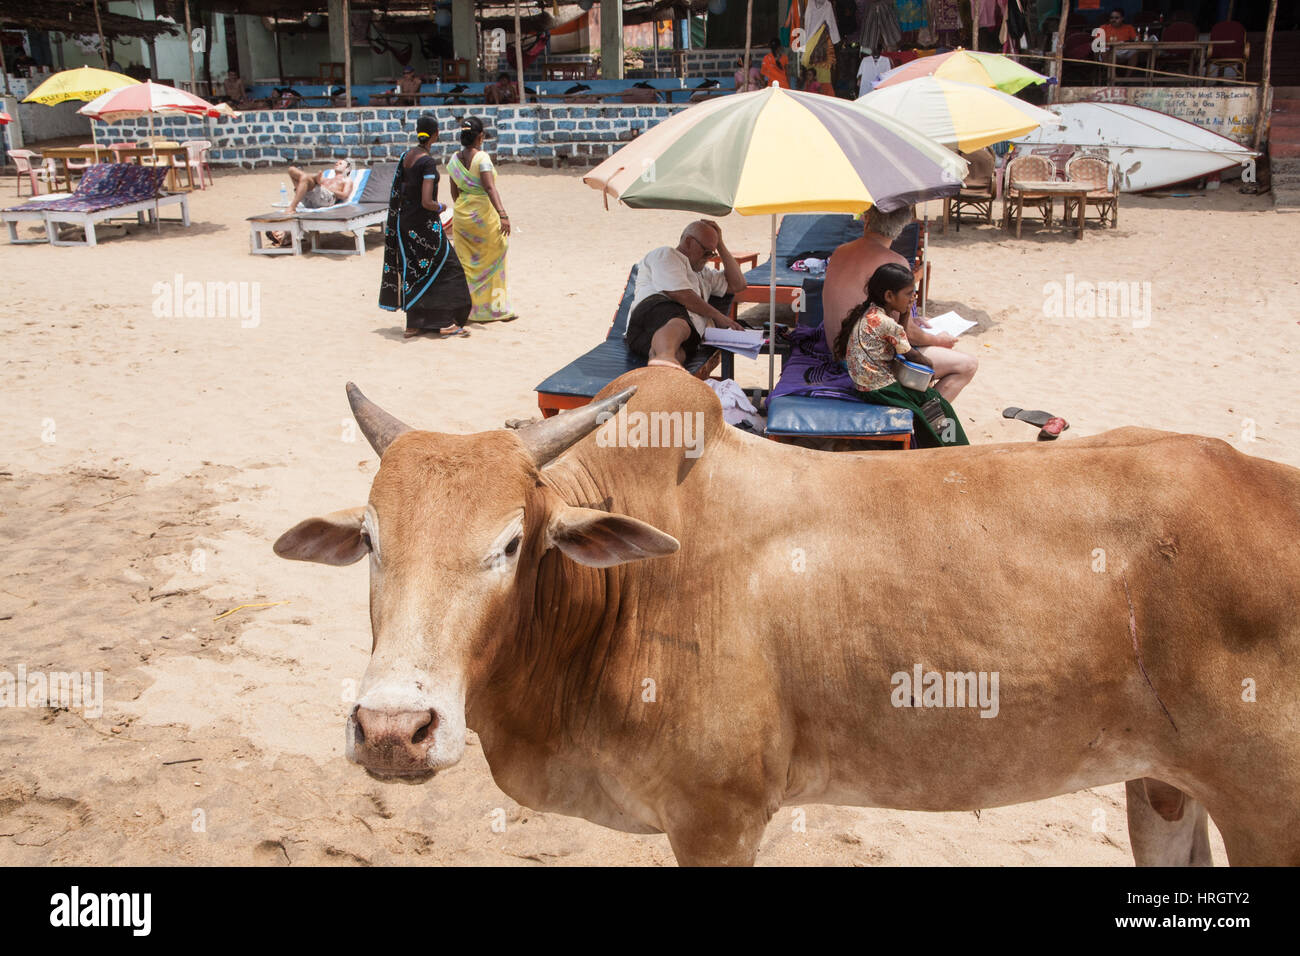 Bull,bullock,cow,strolling,on,beach,contrast,juxtaposition,with,tourists, bikini,shorts,sunbathing,sun  beds,relaxing,Beach,Goa,India,Indian,Asia,Asian Stock Photo - Alamy